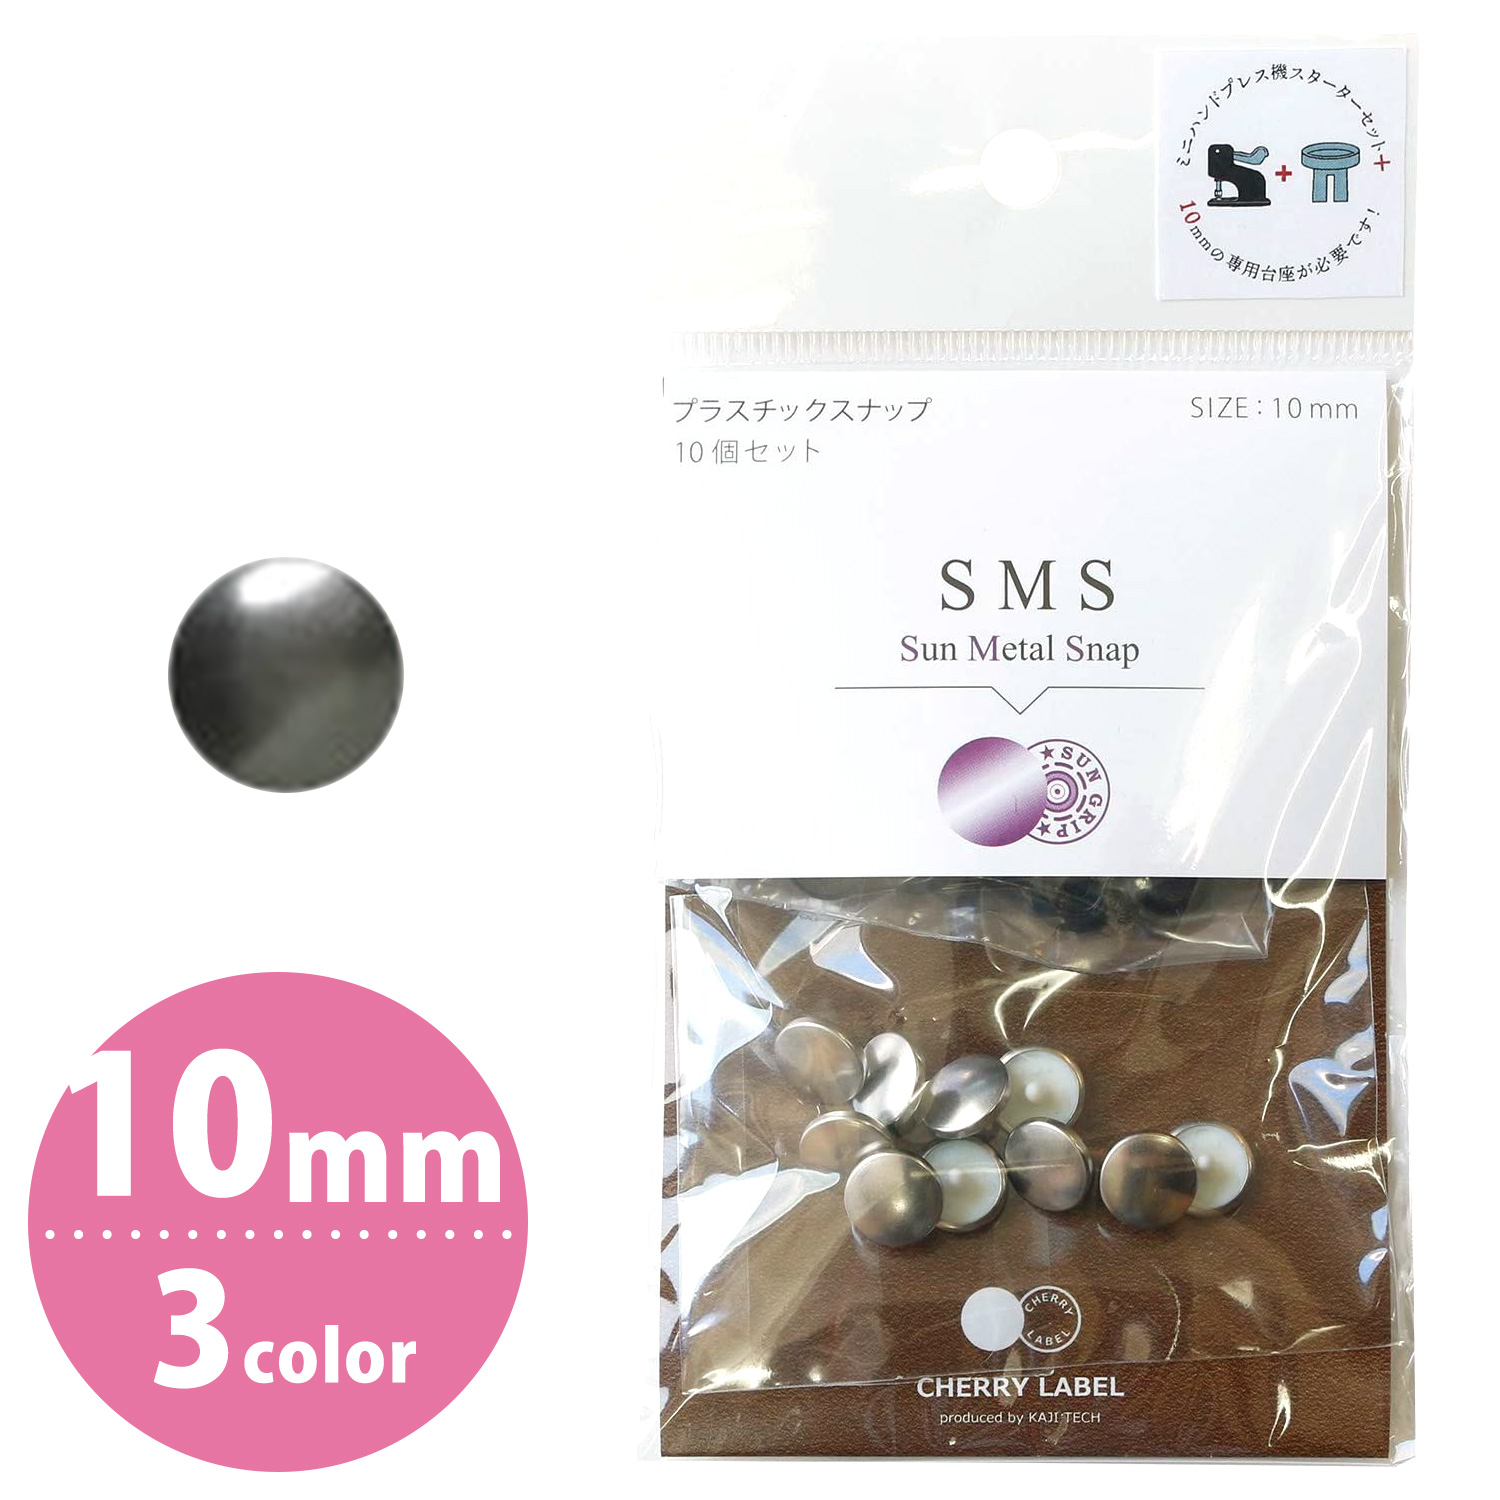 SMS10 SUN METAL SNAP メタル風スナップ 10mm 10組 (袋)